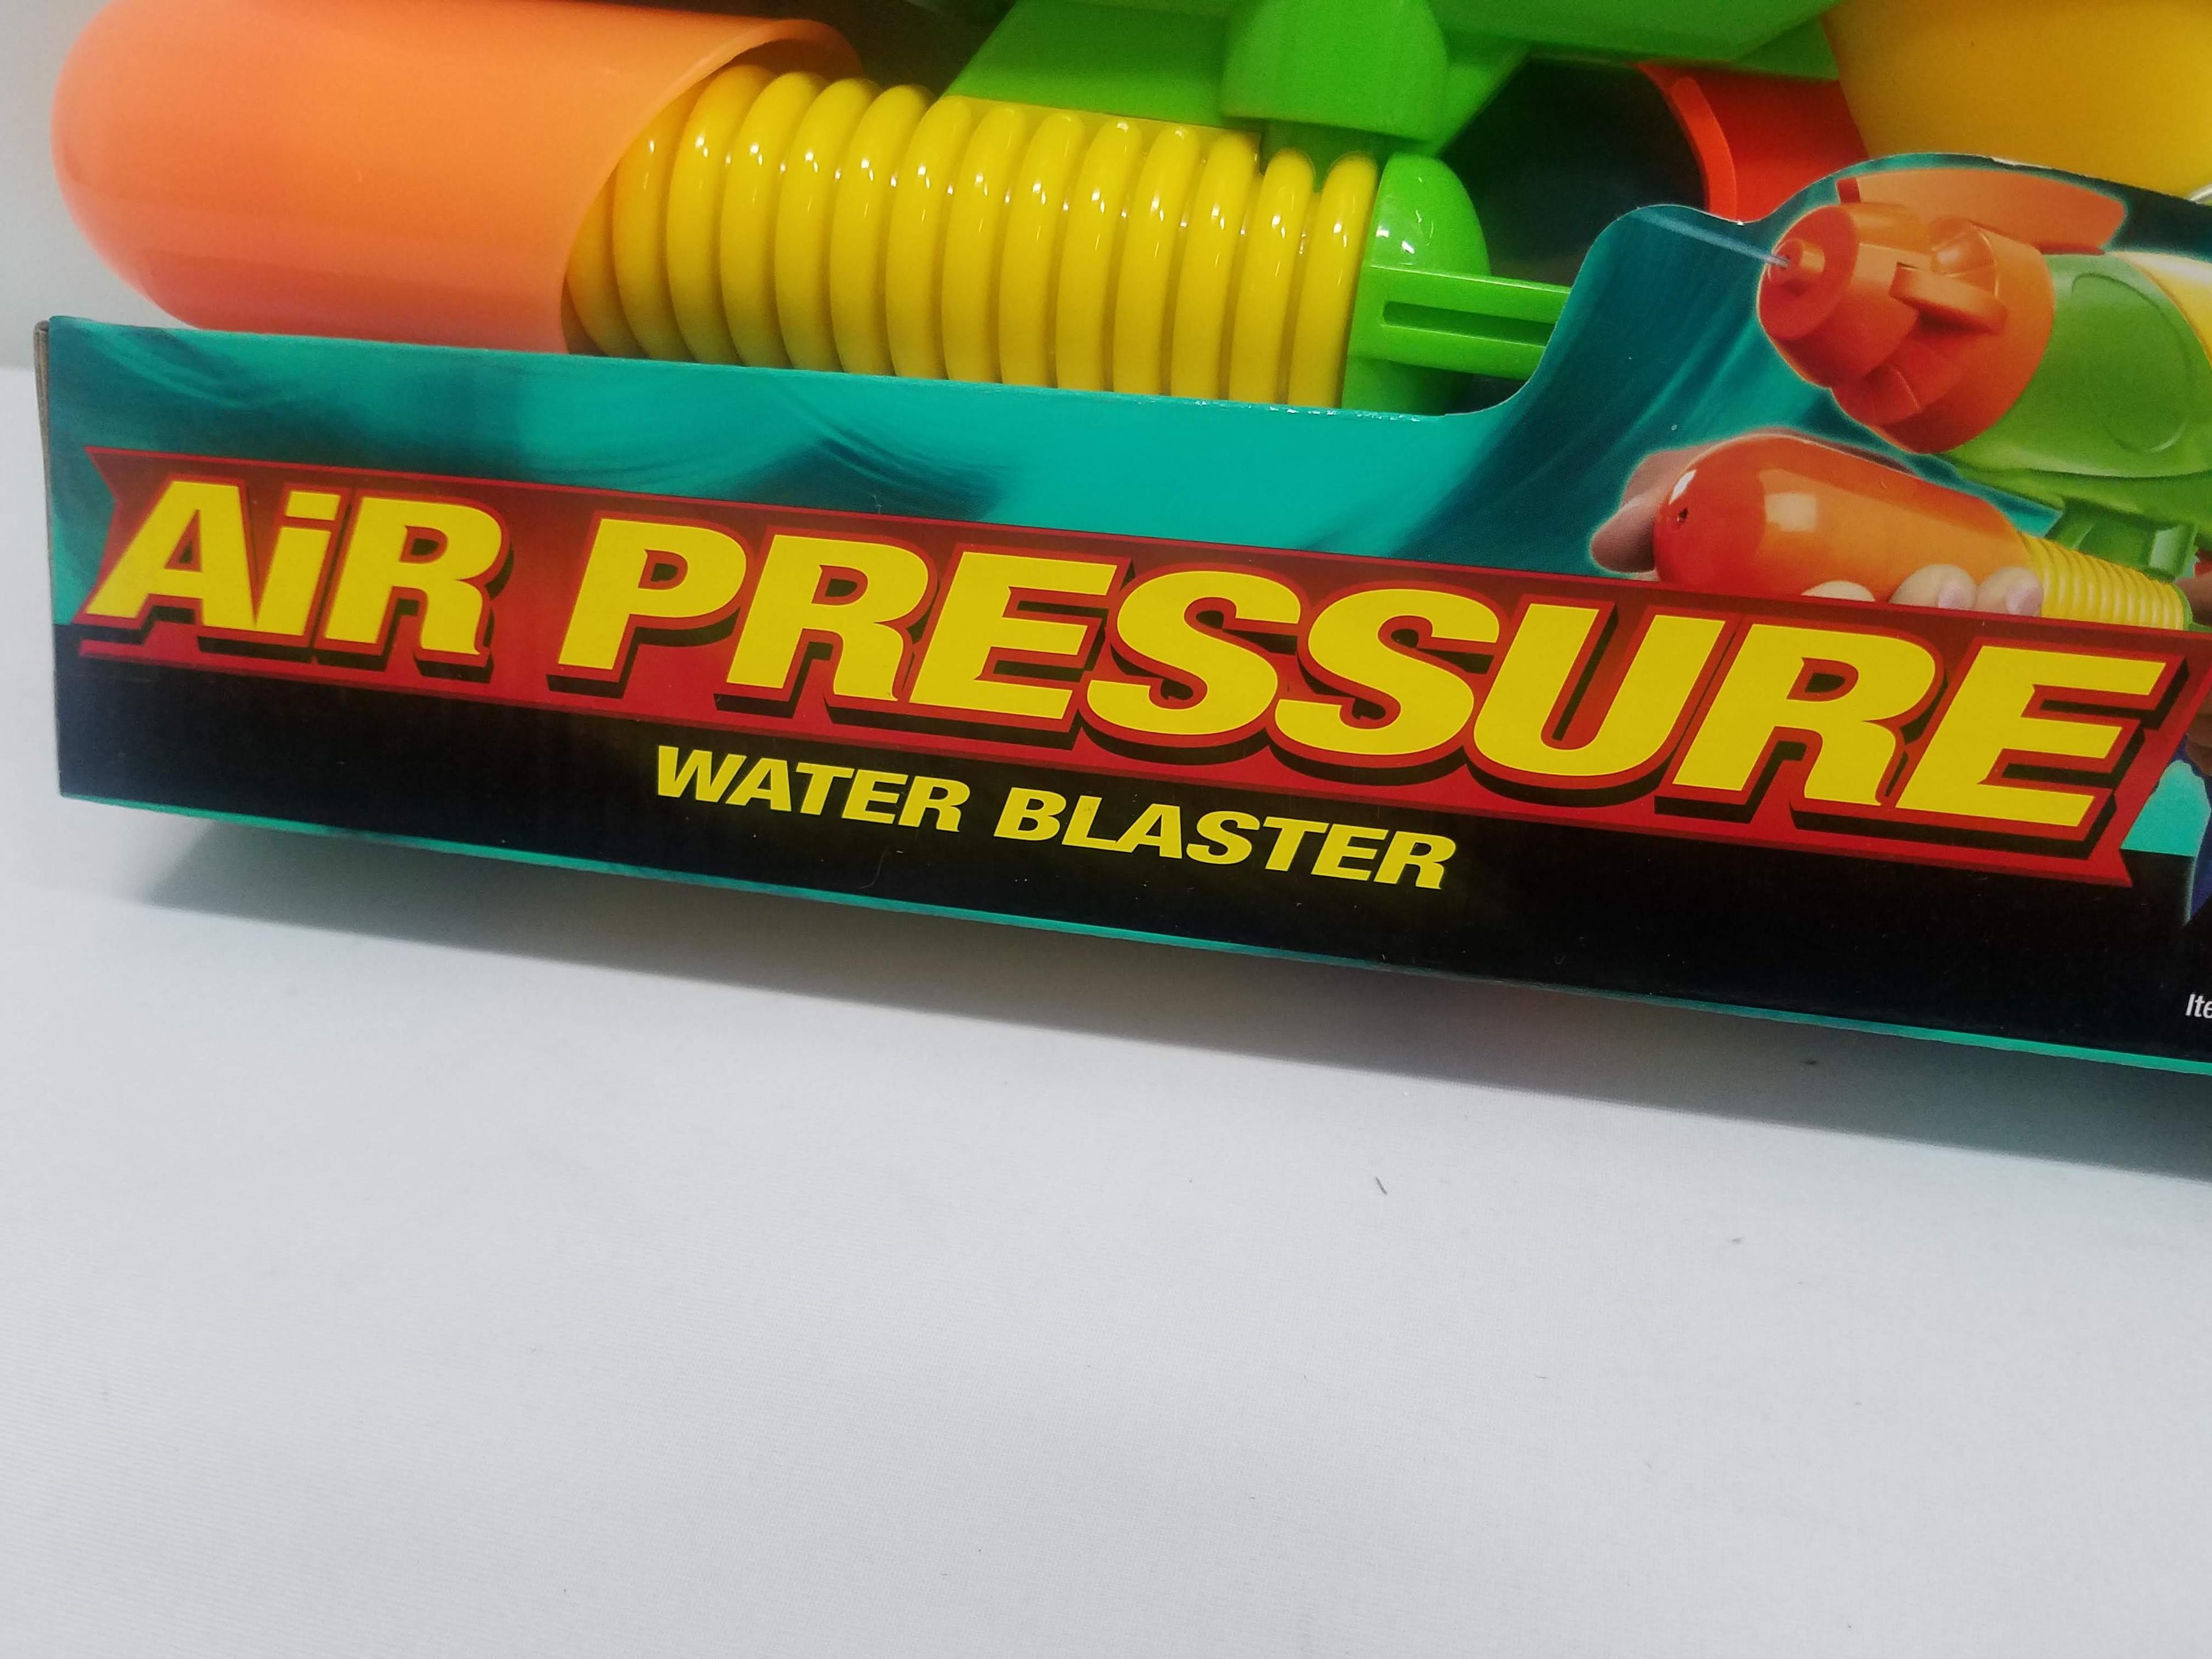 Barbie 3 Ring Pool & Water Blaster Toy - New